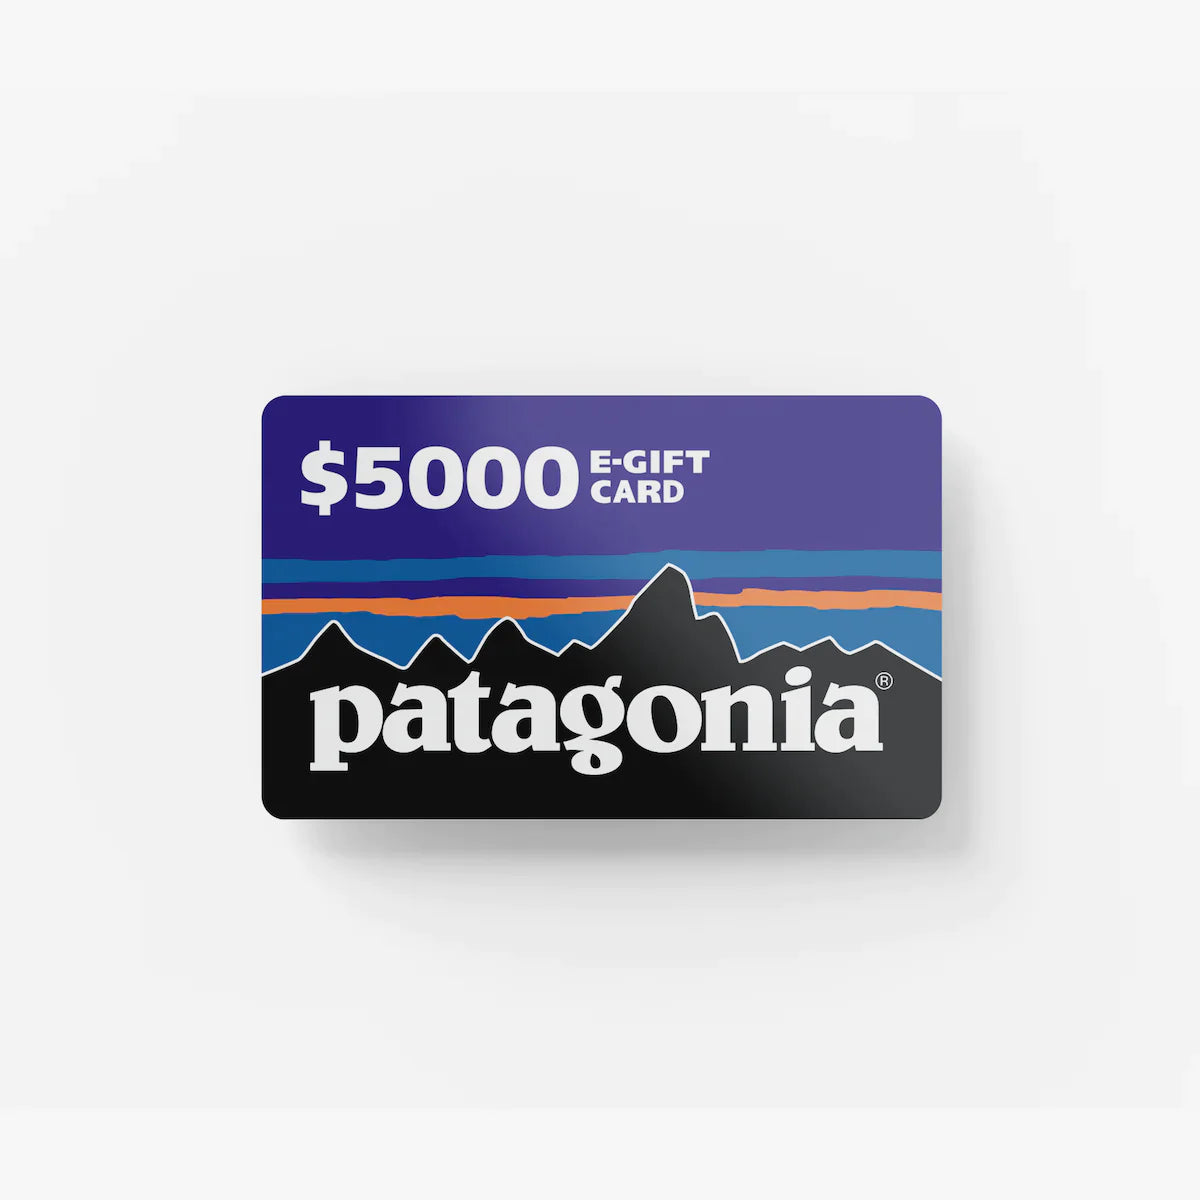 Patagonia E-Gift Card